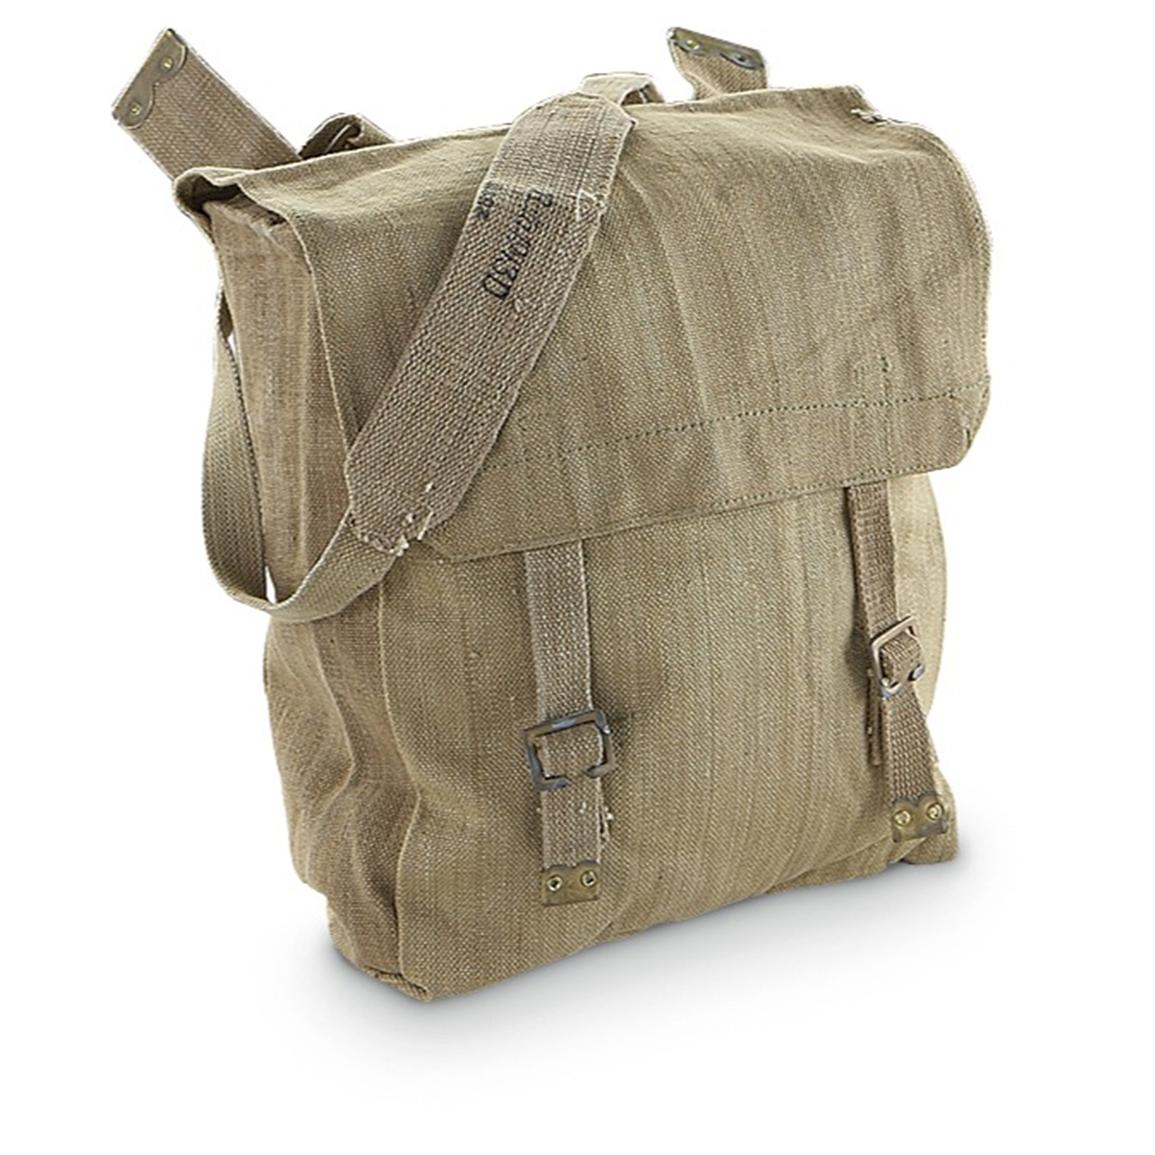 Used British Military WWII - era Shoulder Bag - 197043, Military Field ...